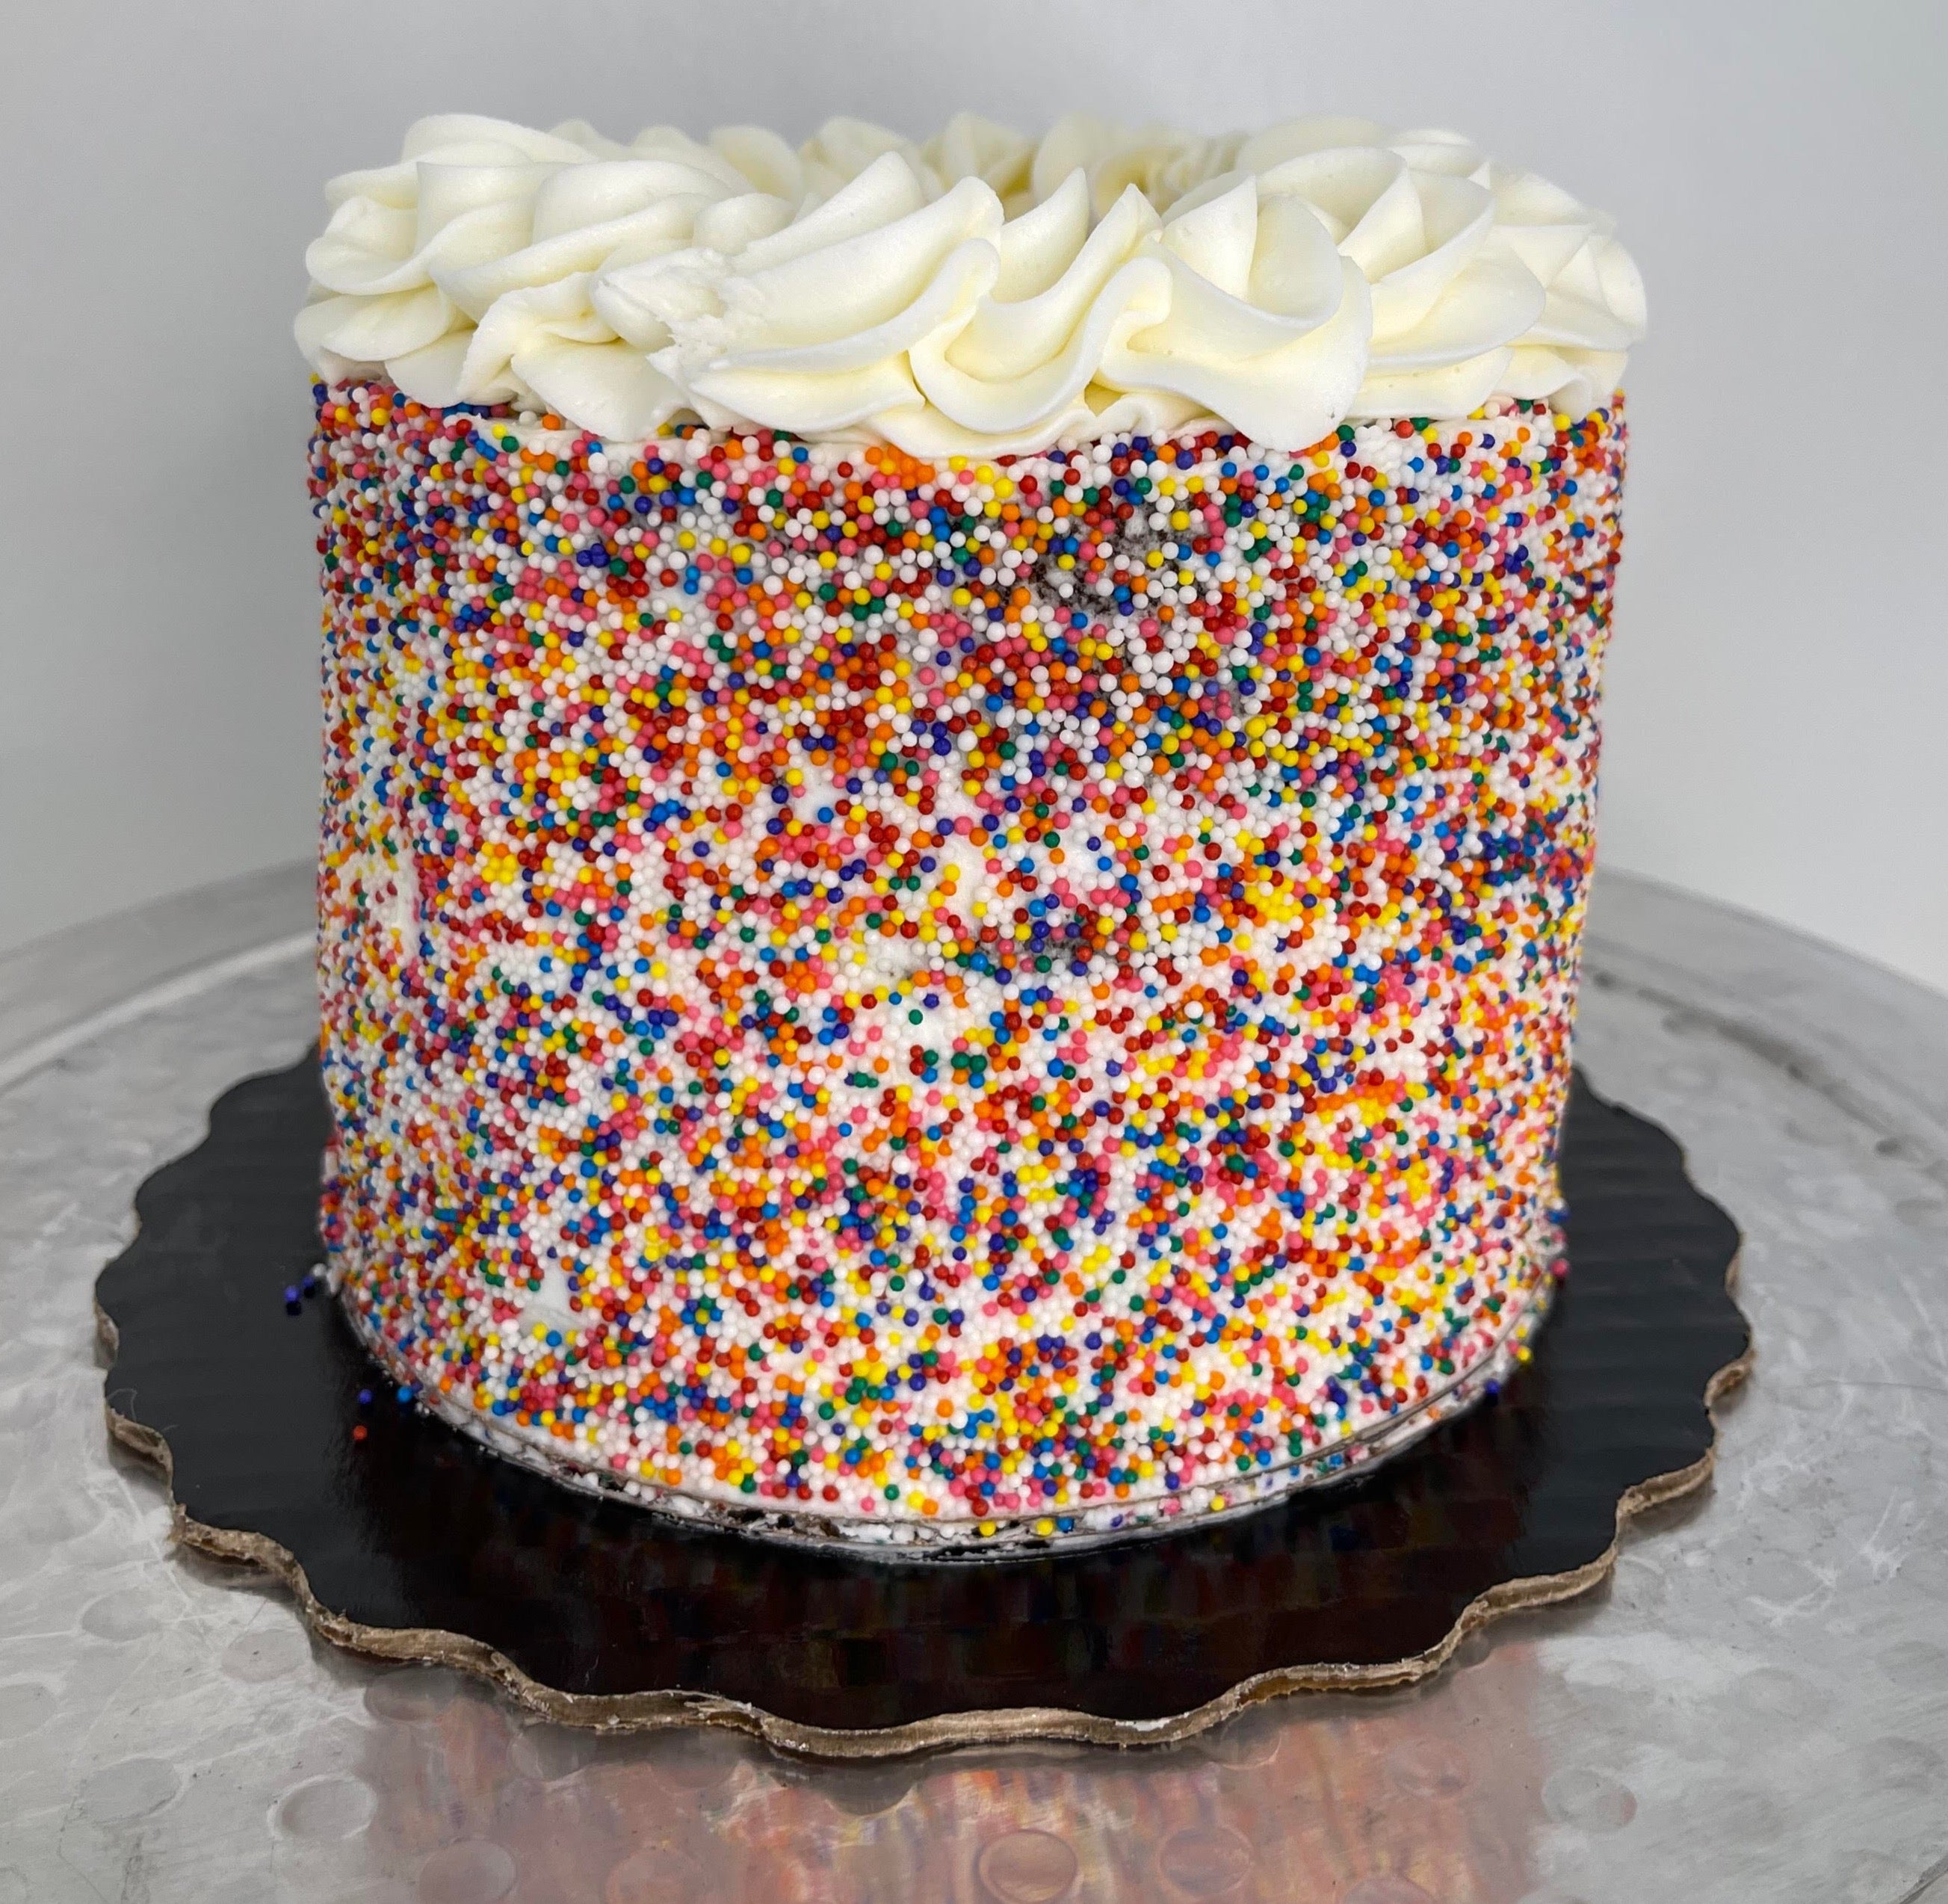 CAKE - 6" 12 Servings - Buttercream Celebration Sprinkles Cake - Chocolate